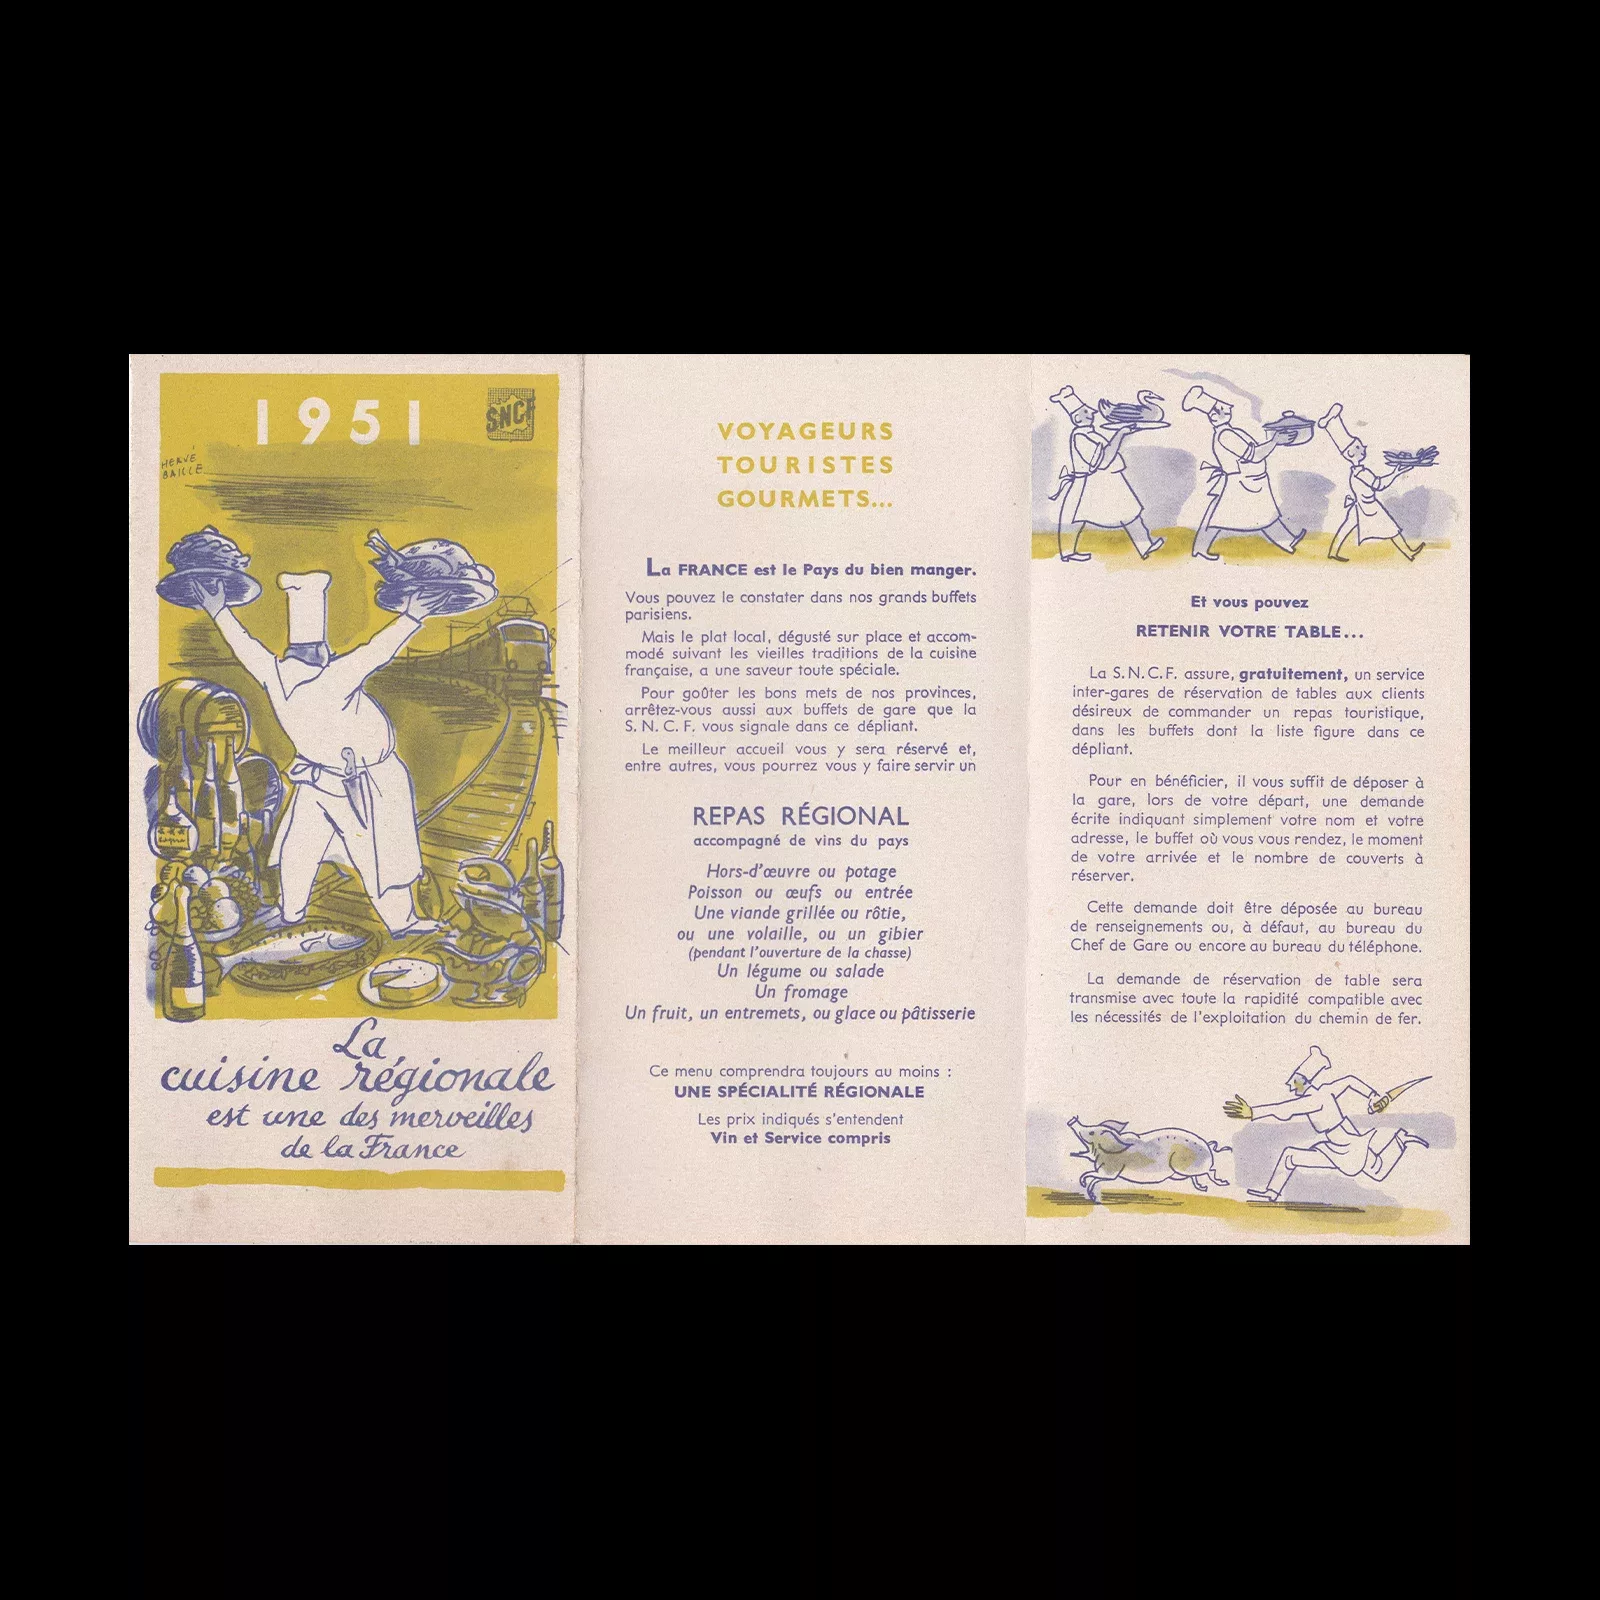 Regional Cuisine Brochure, French National Railways, 1951